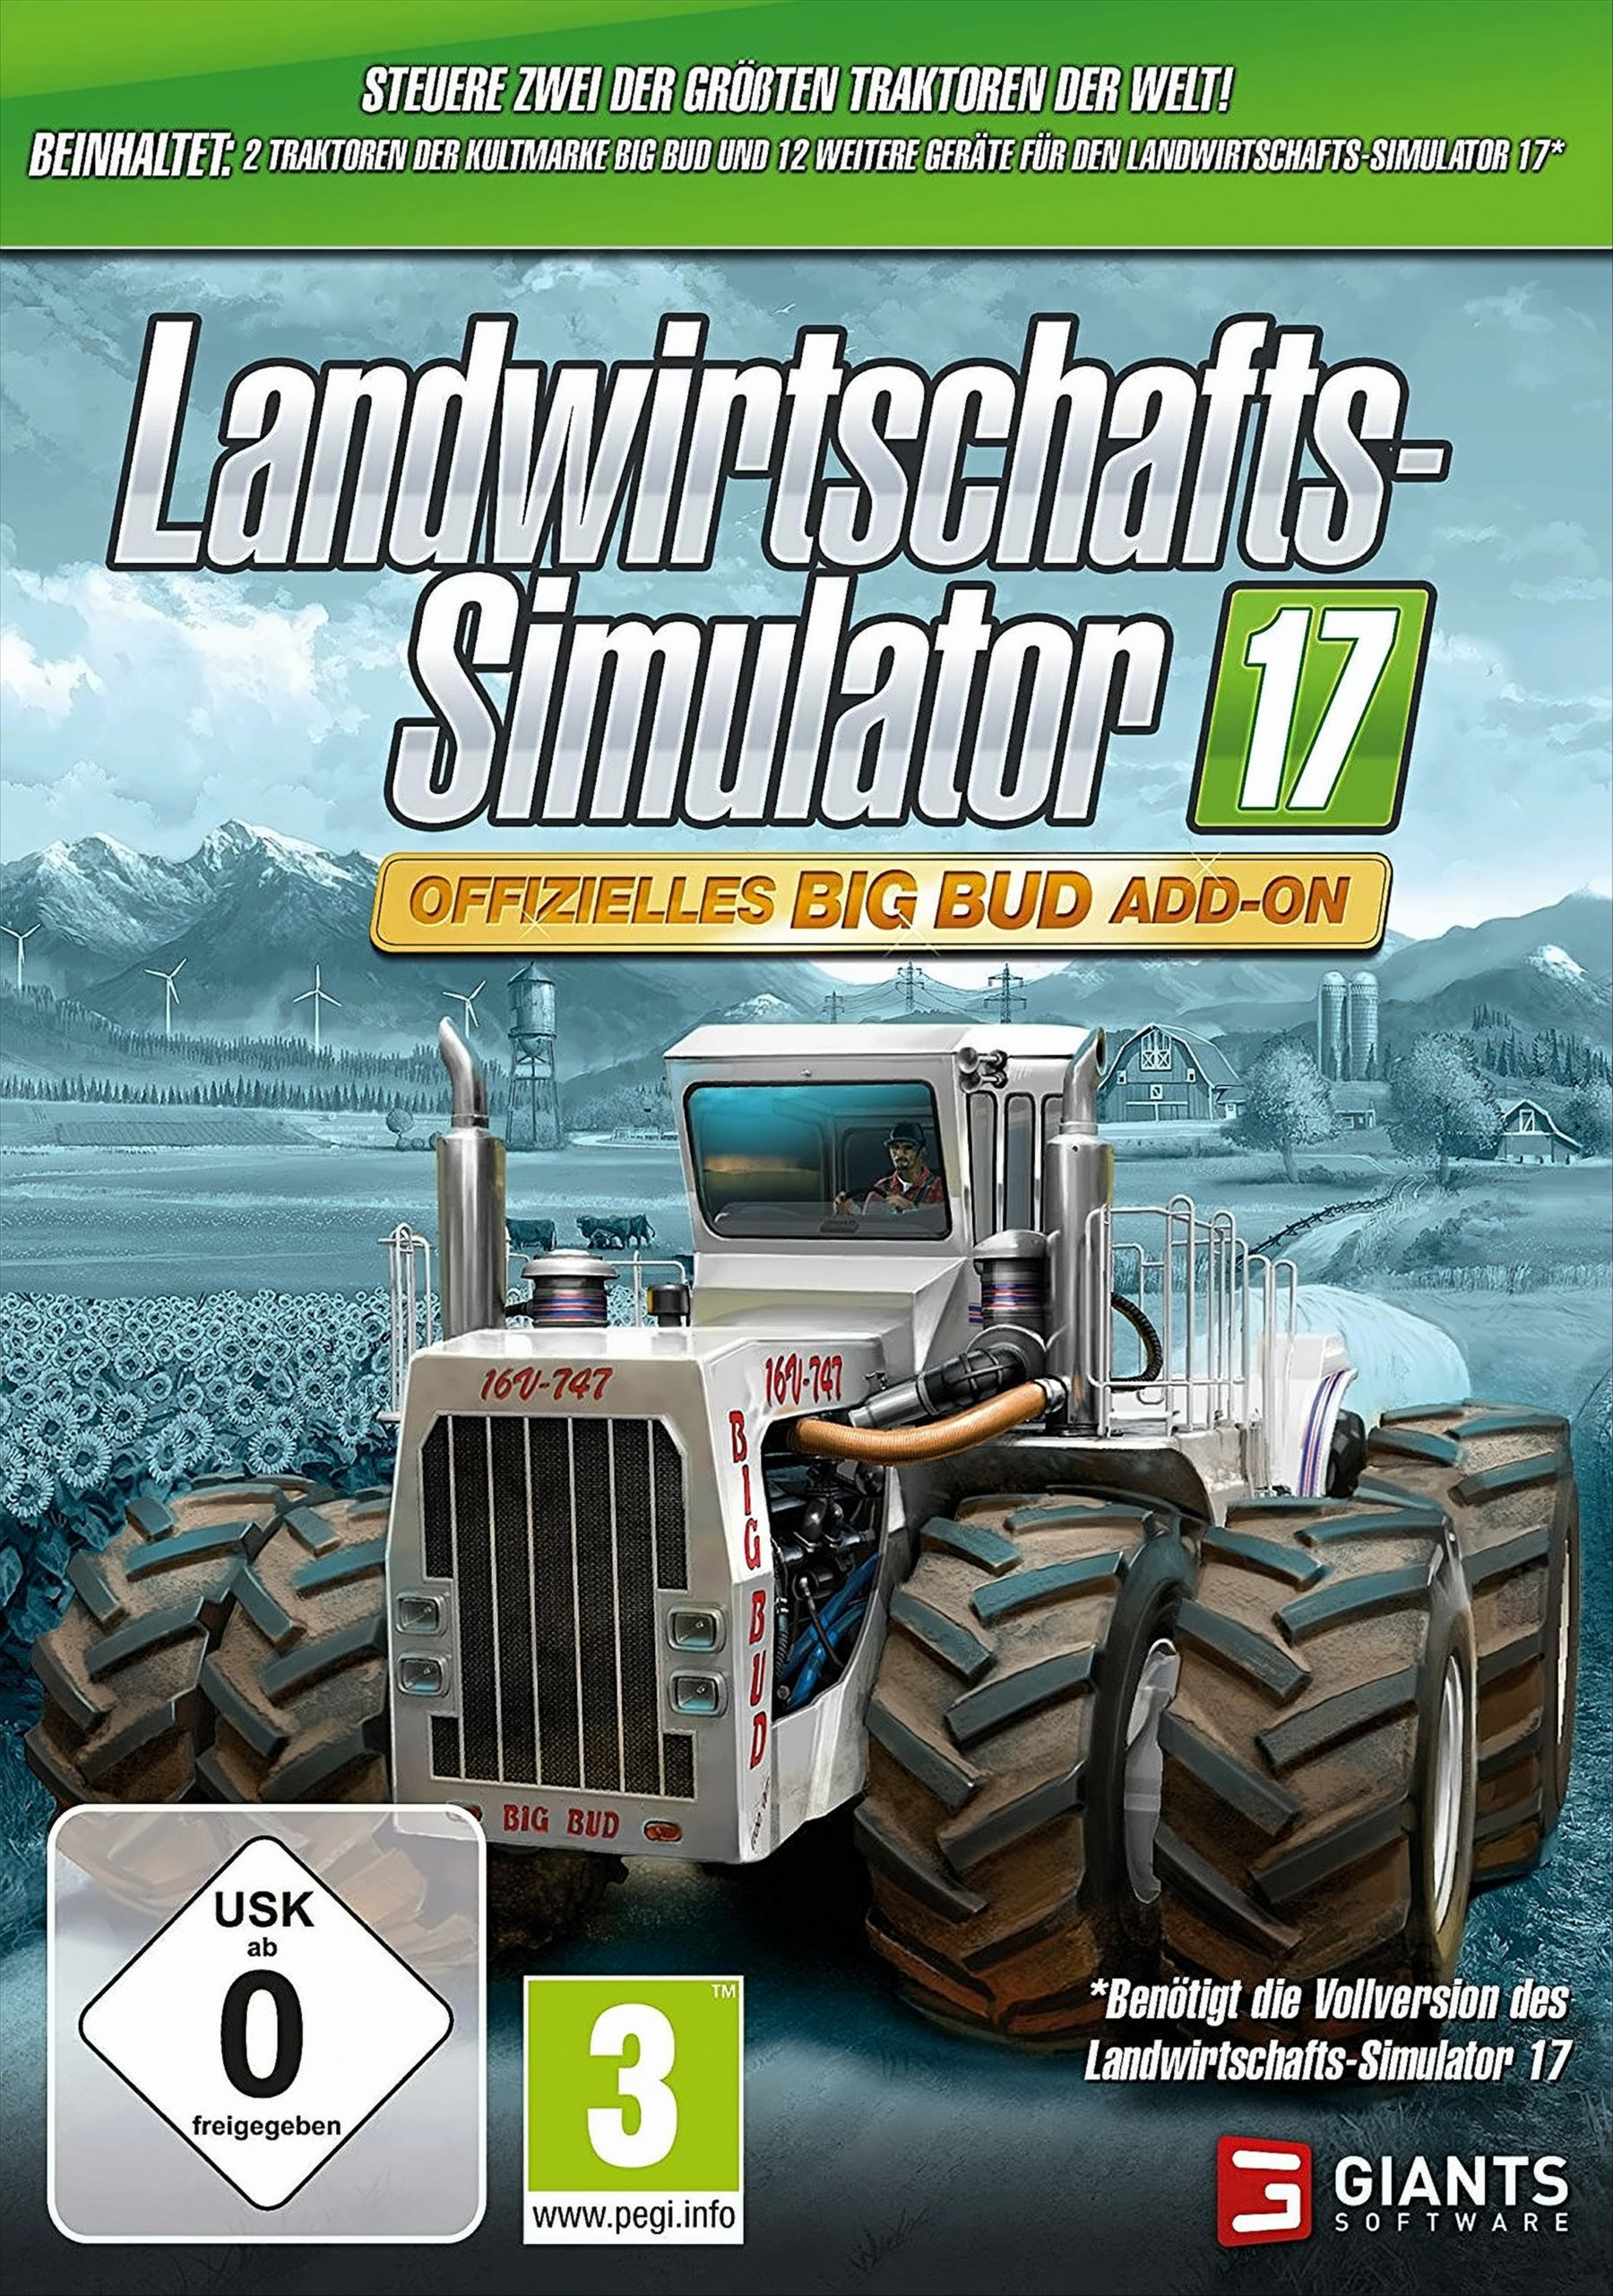 Add-On - Bud Big Landwirtschafts-Simulator Offizielles [PC] 17: